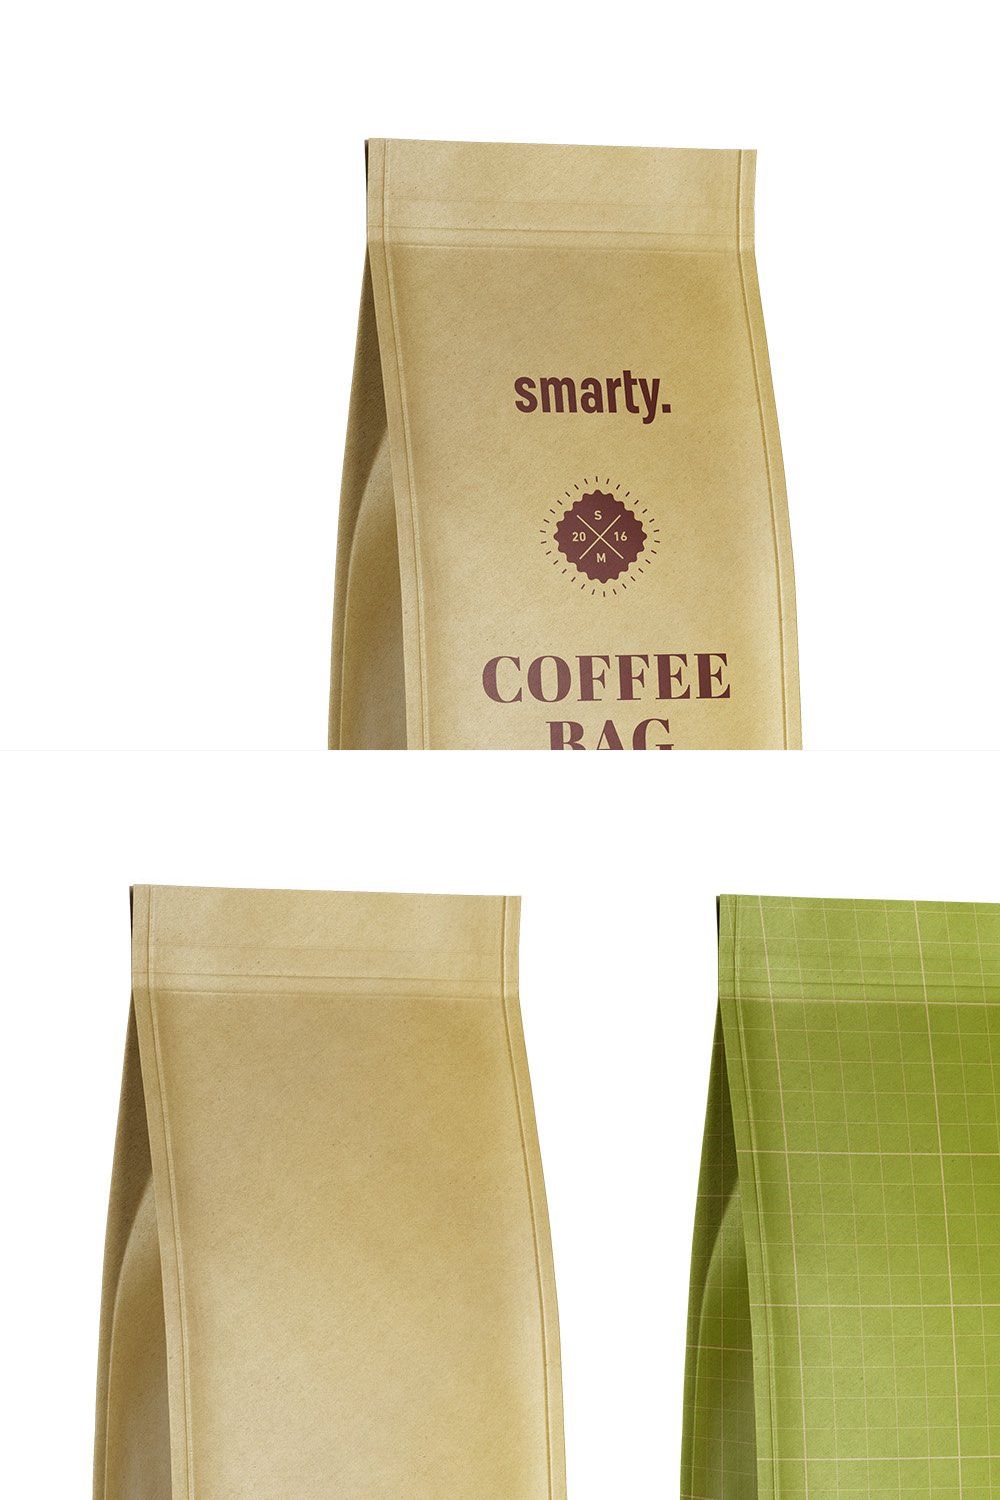 Eco coffee bag mockup pinterest preview image.